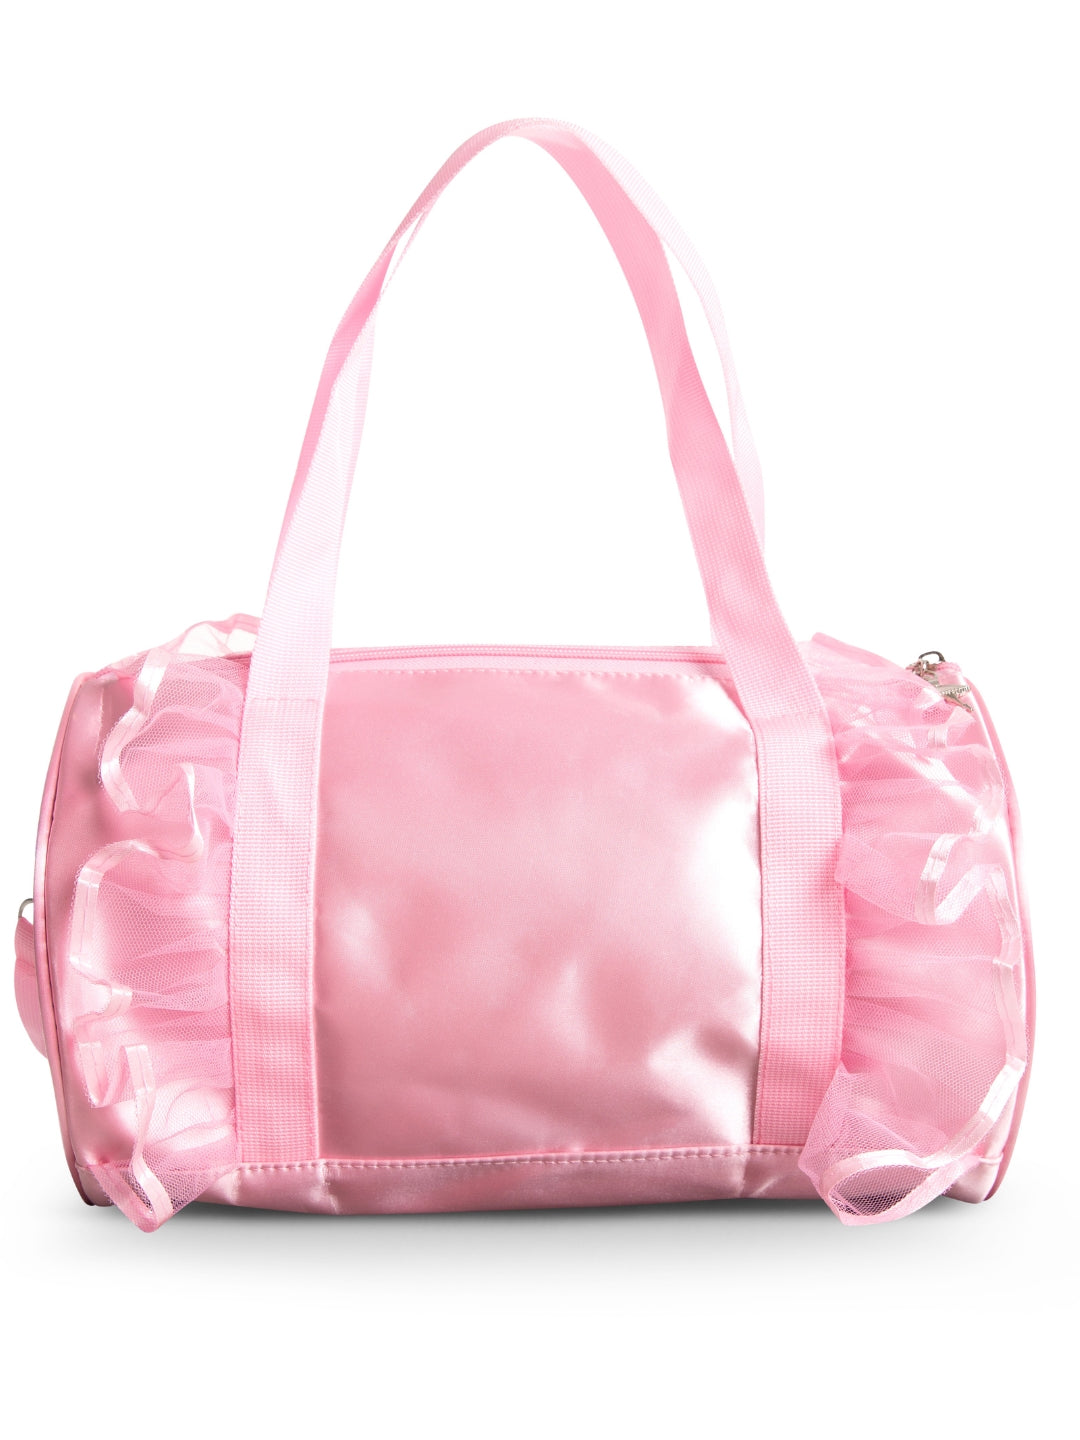 B281C Sequin Ballerina Barrel Bag